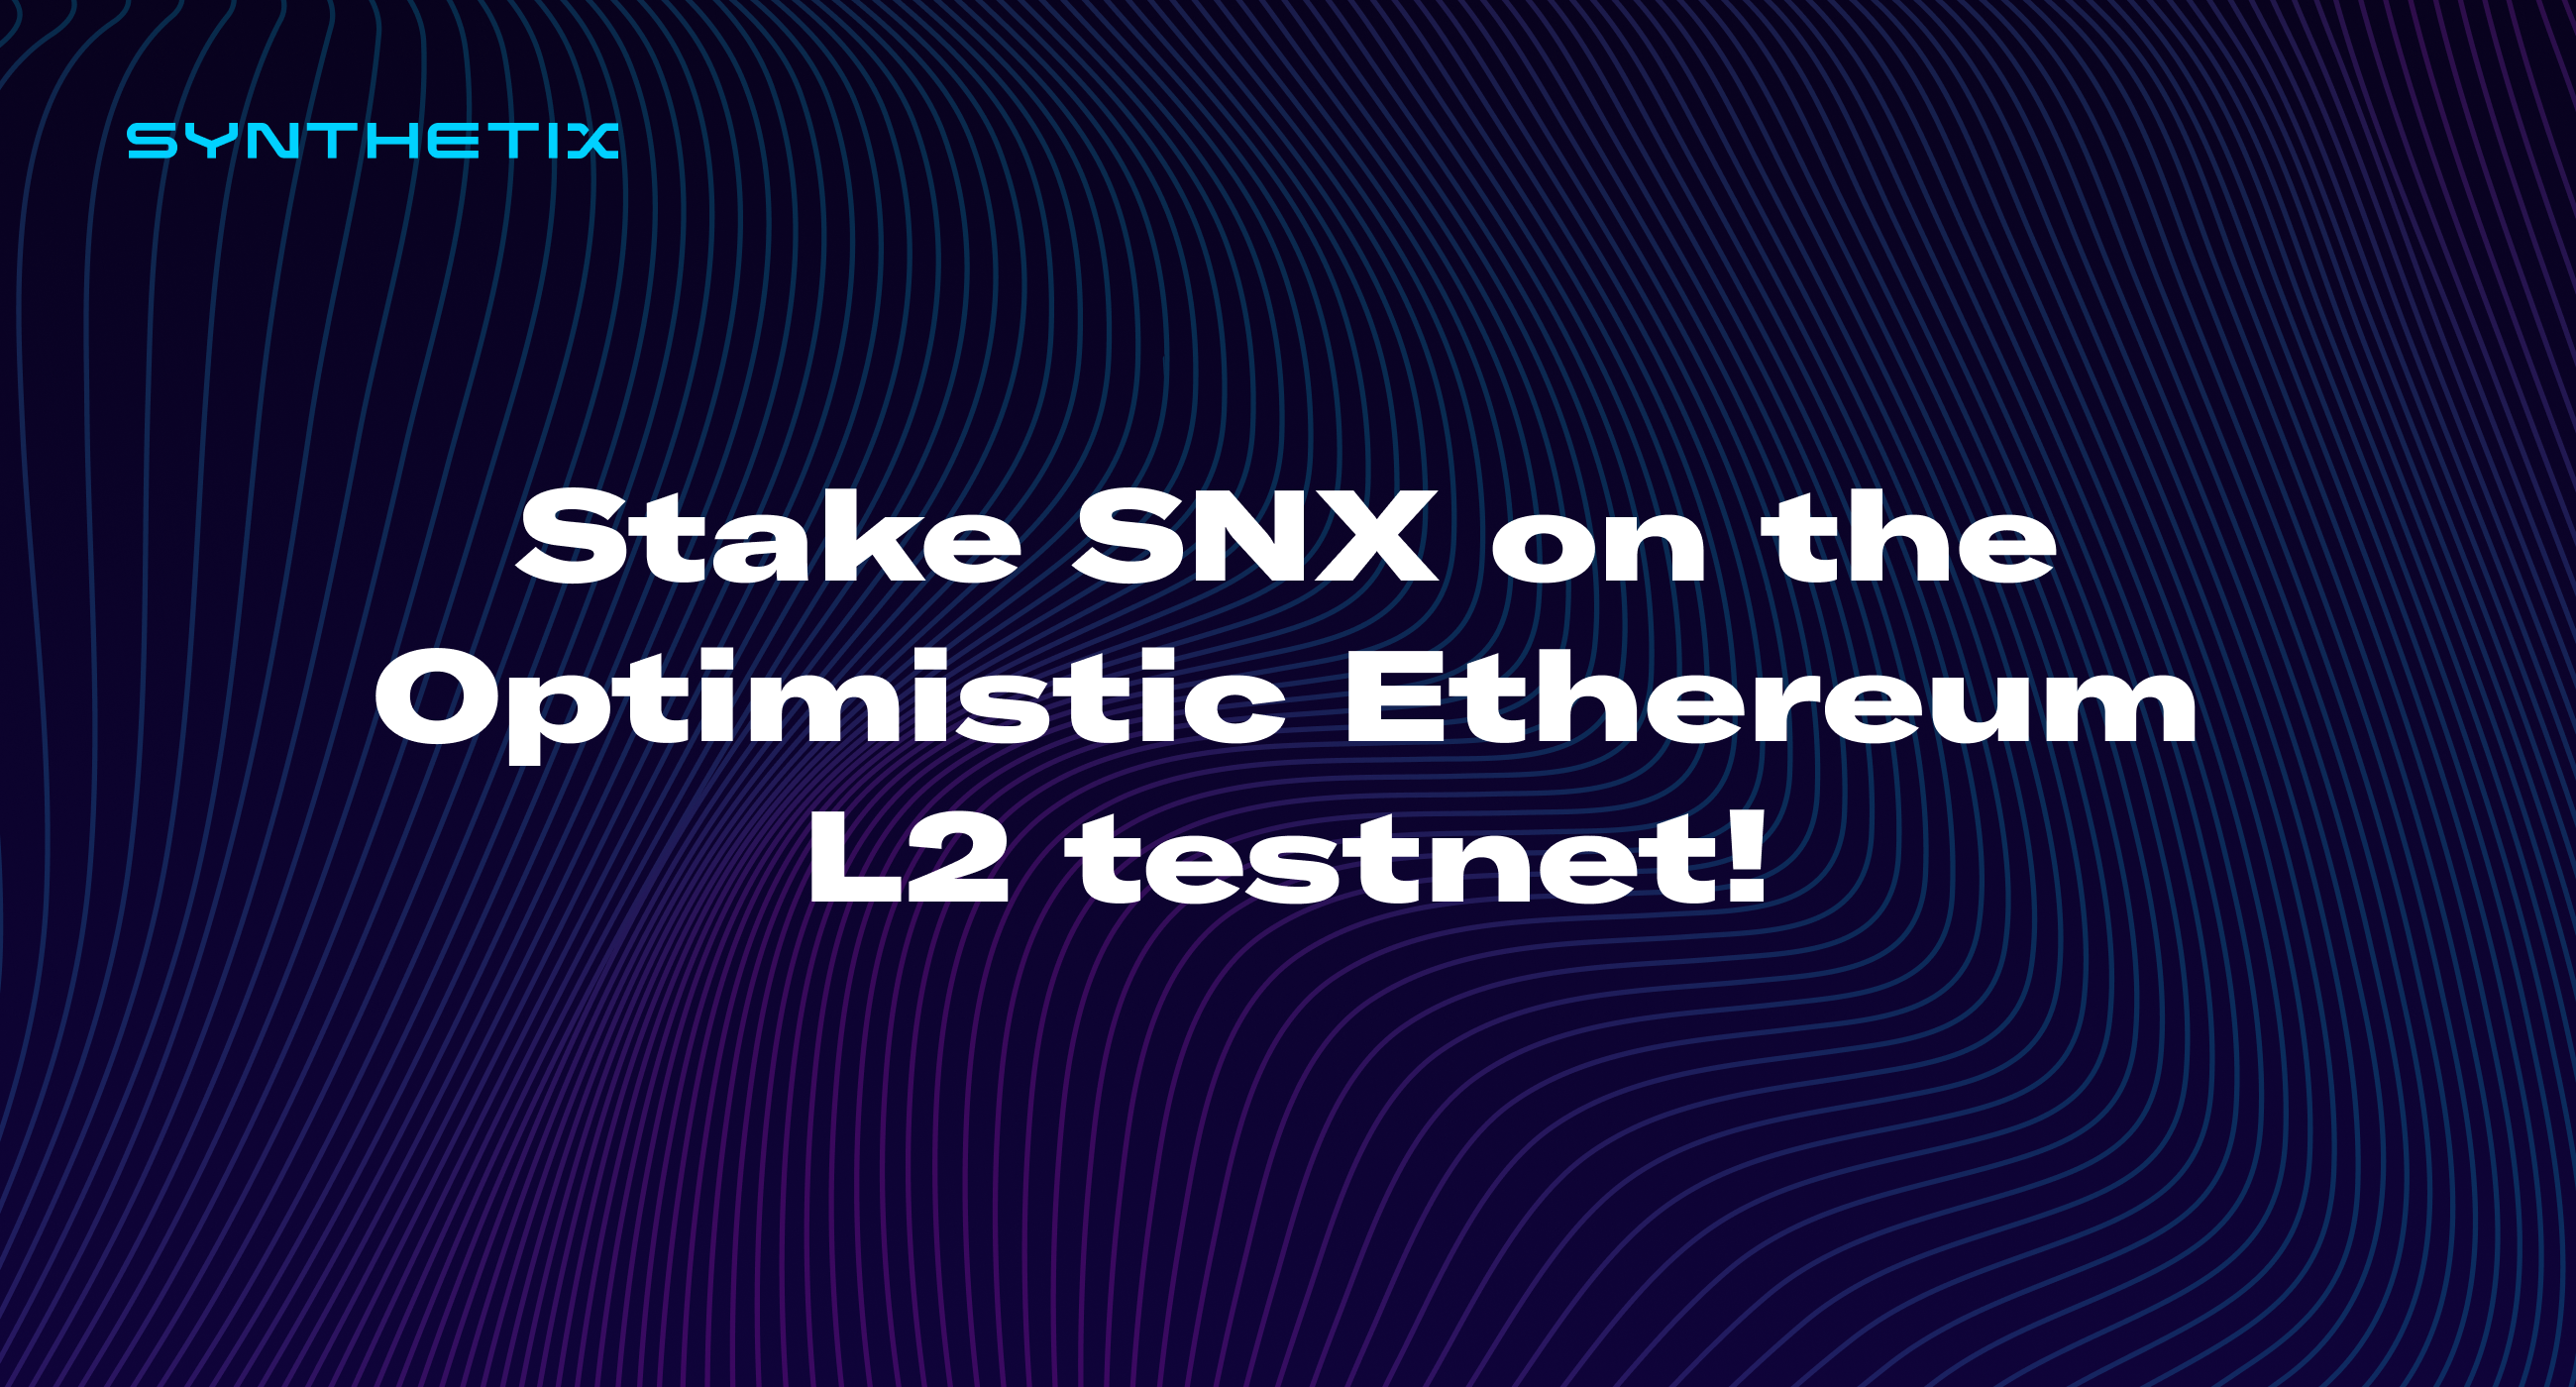 Stake SNX on the Optimistic Ethereum L2 testnet!